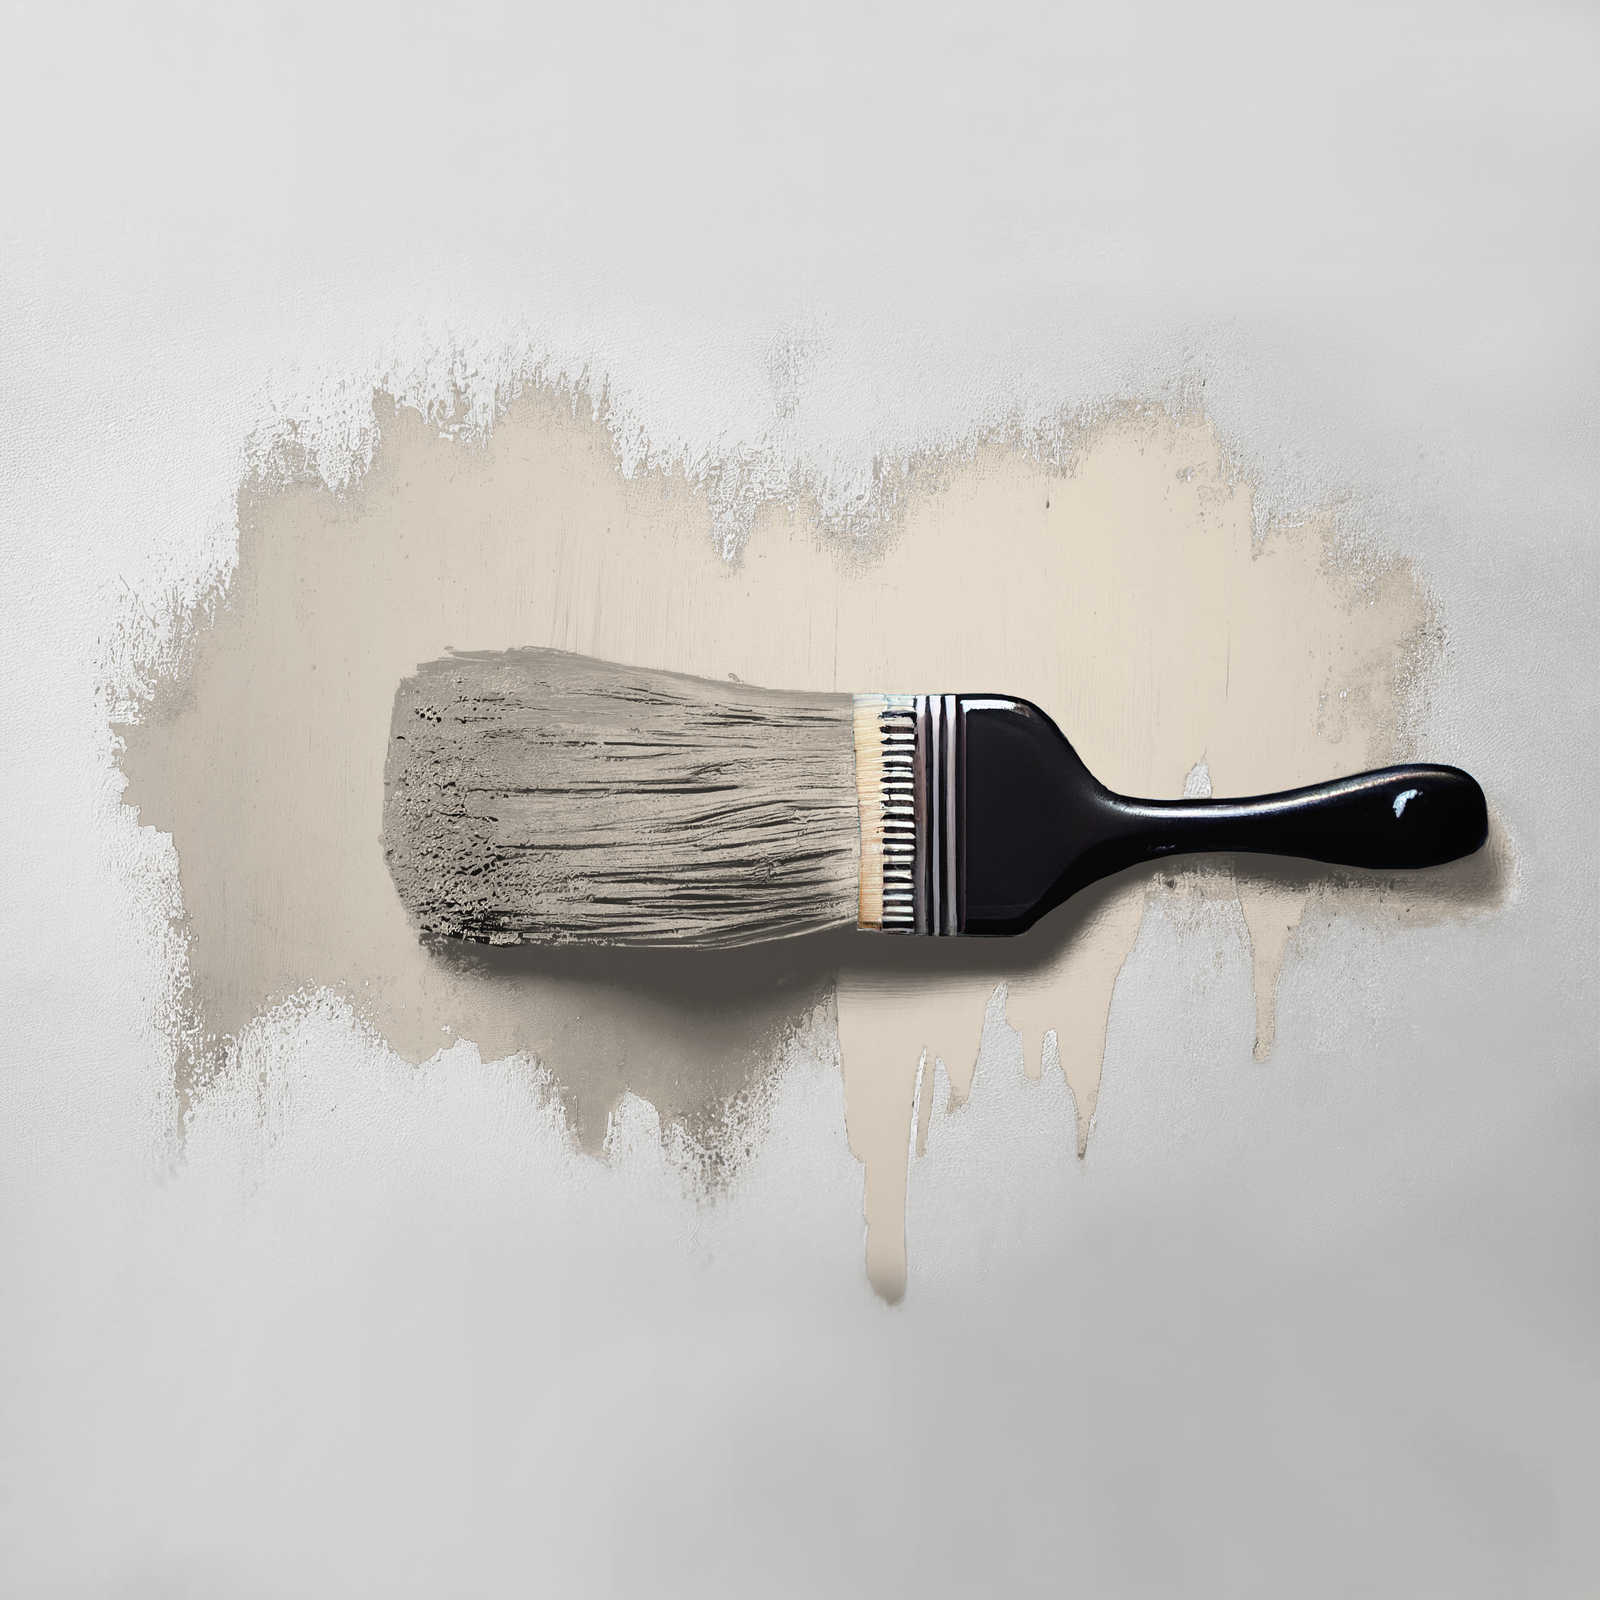             Pittura murale TCK6000 »Sweet Sesame« in beige senza tempo – 2,5 litri
        